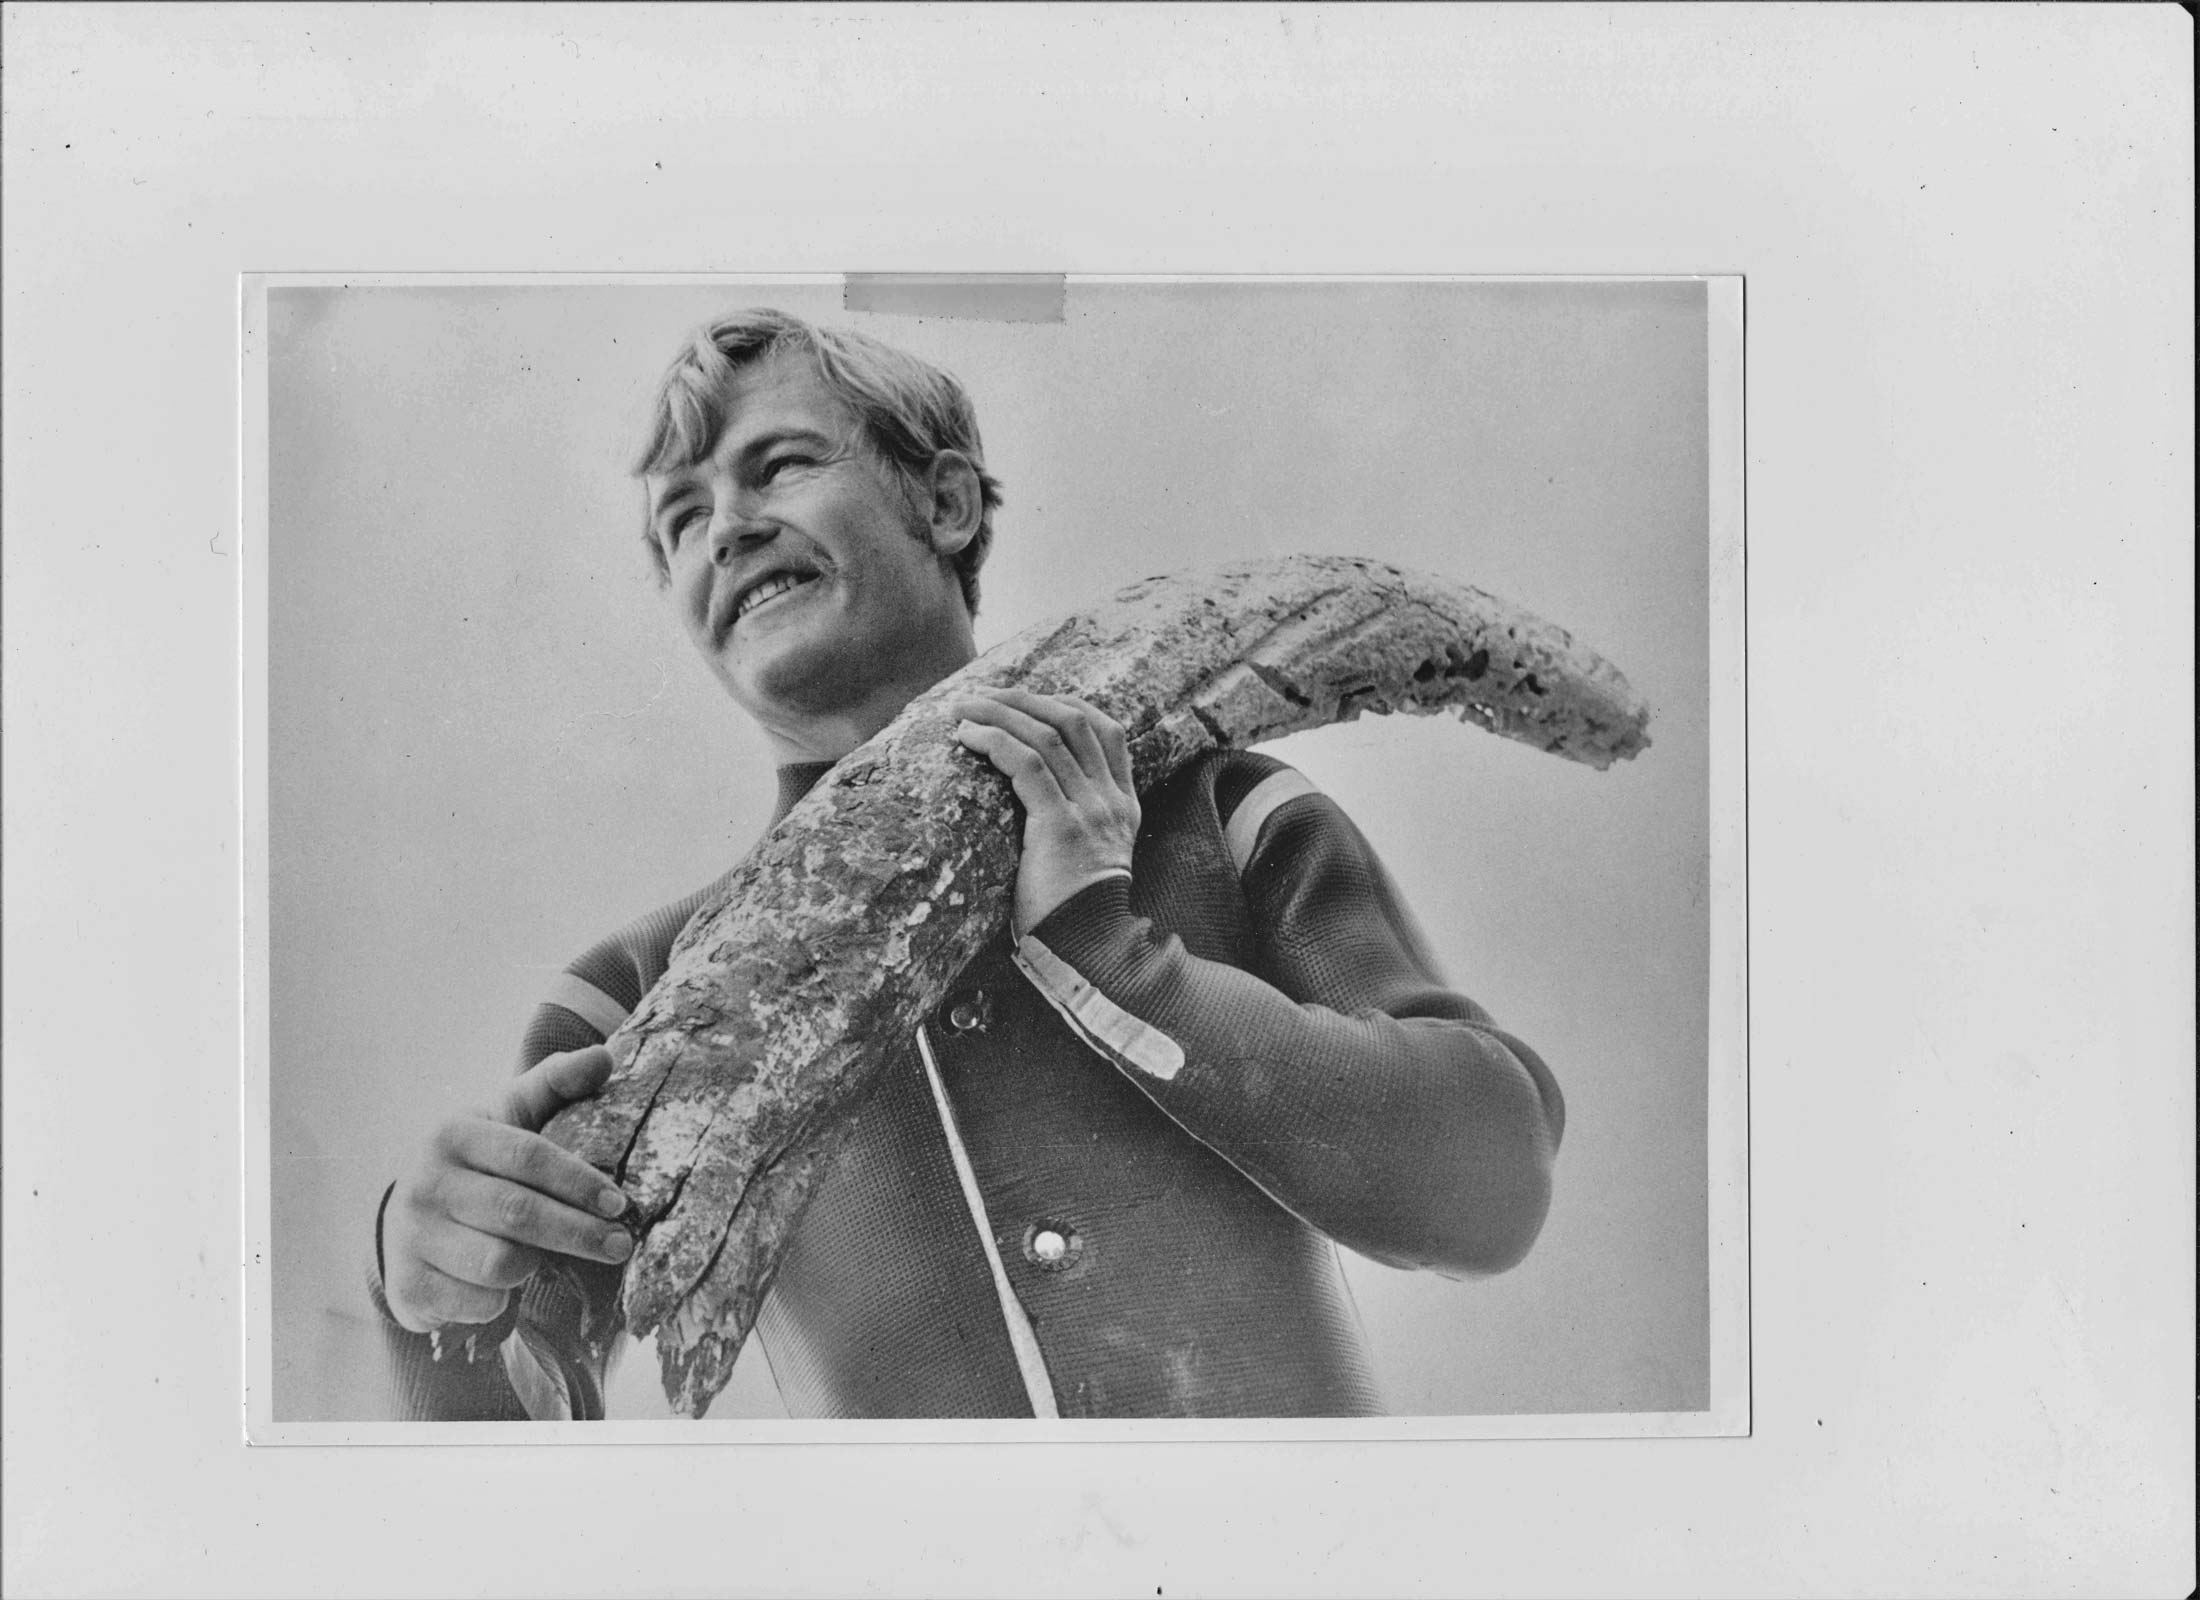 Graeme aged 17 with a Gilt dragon tusk